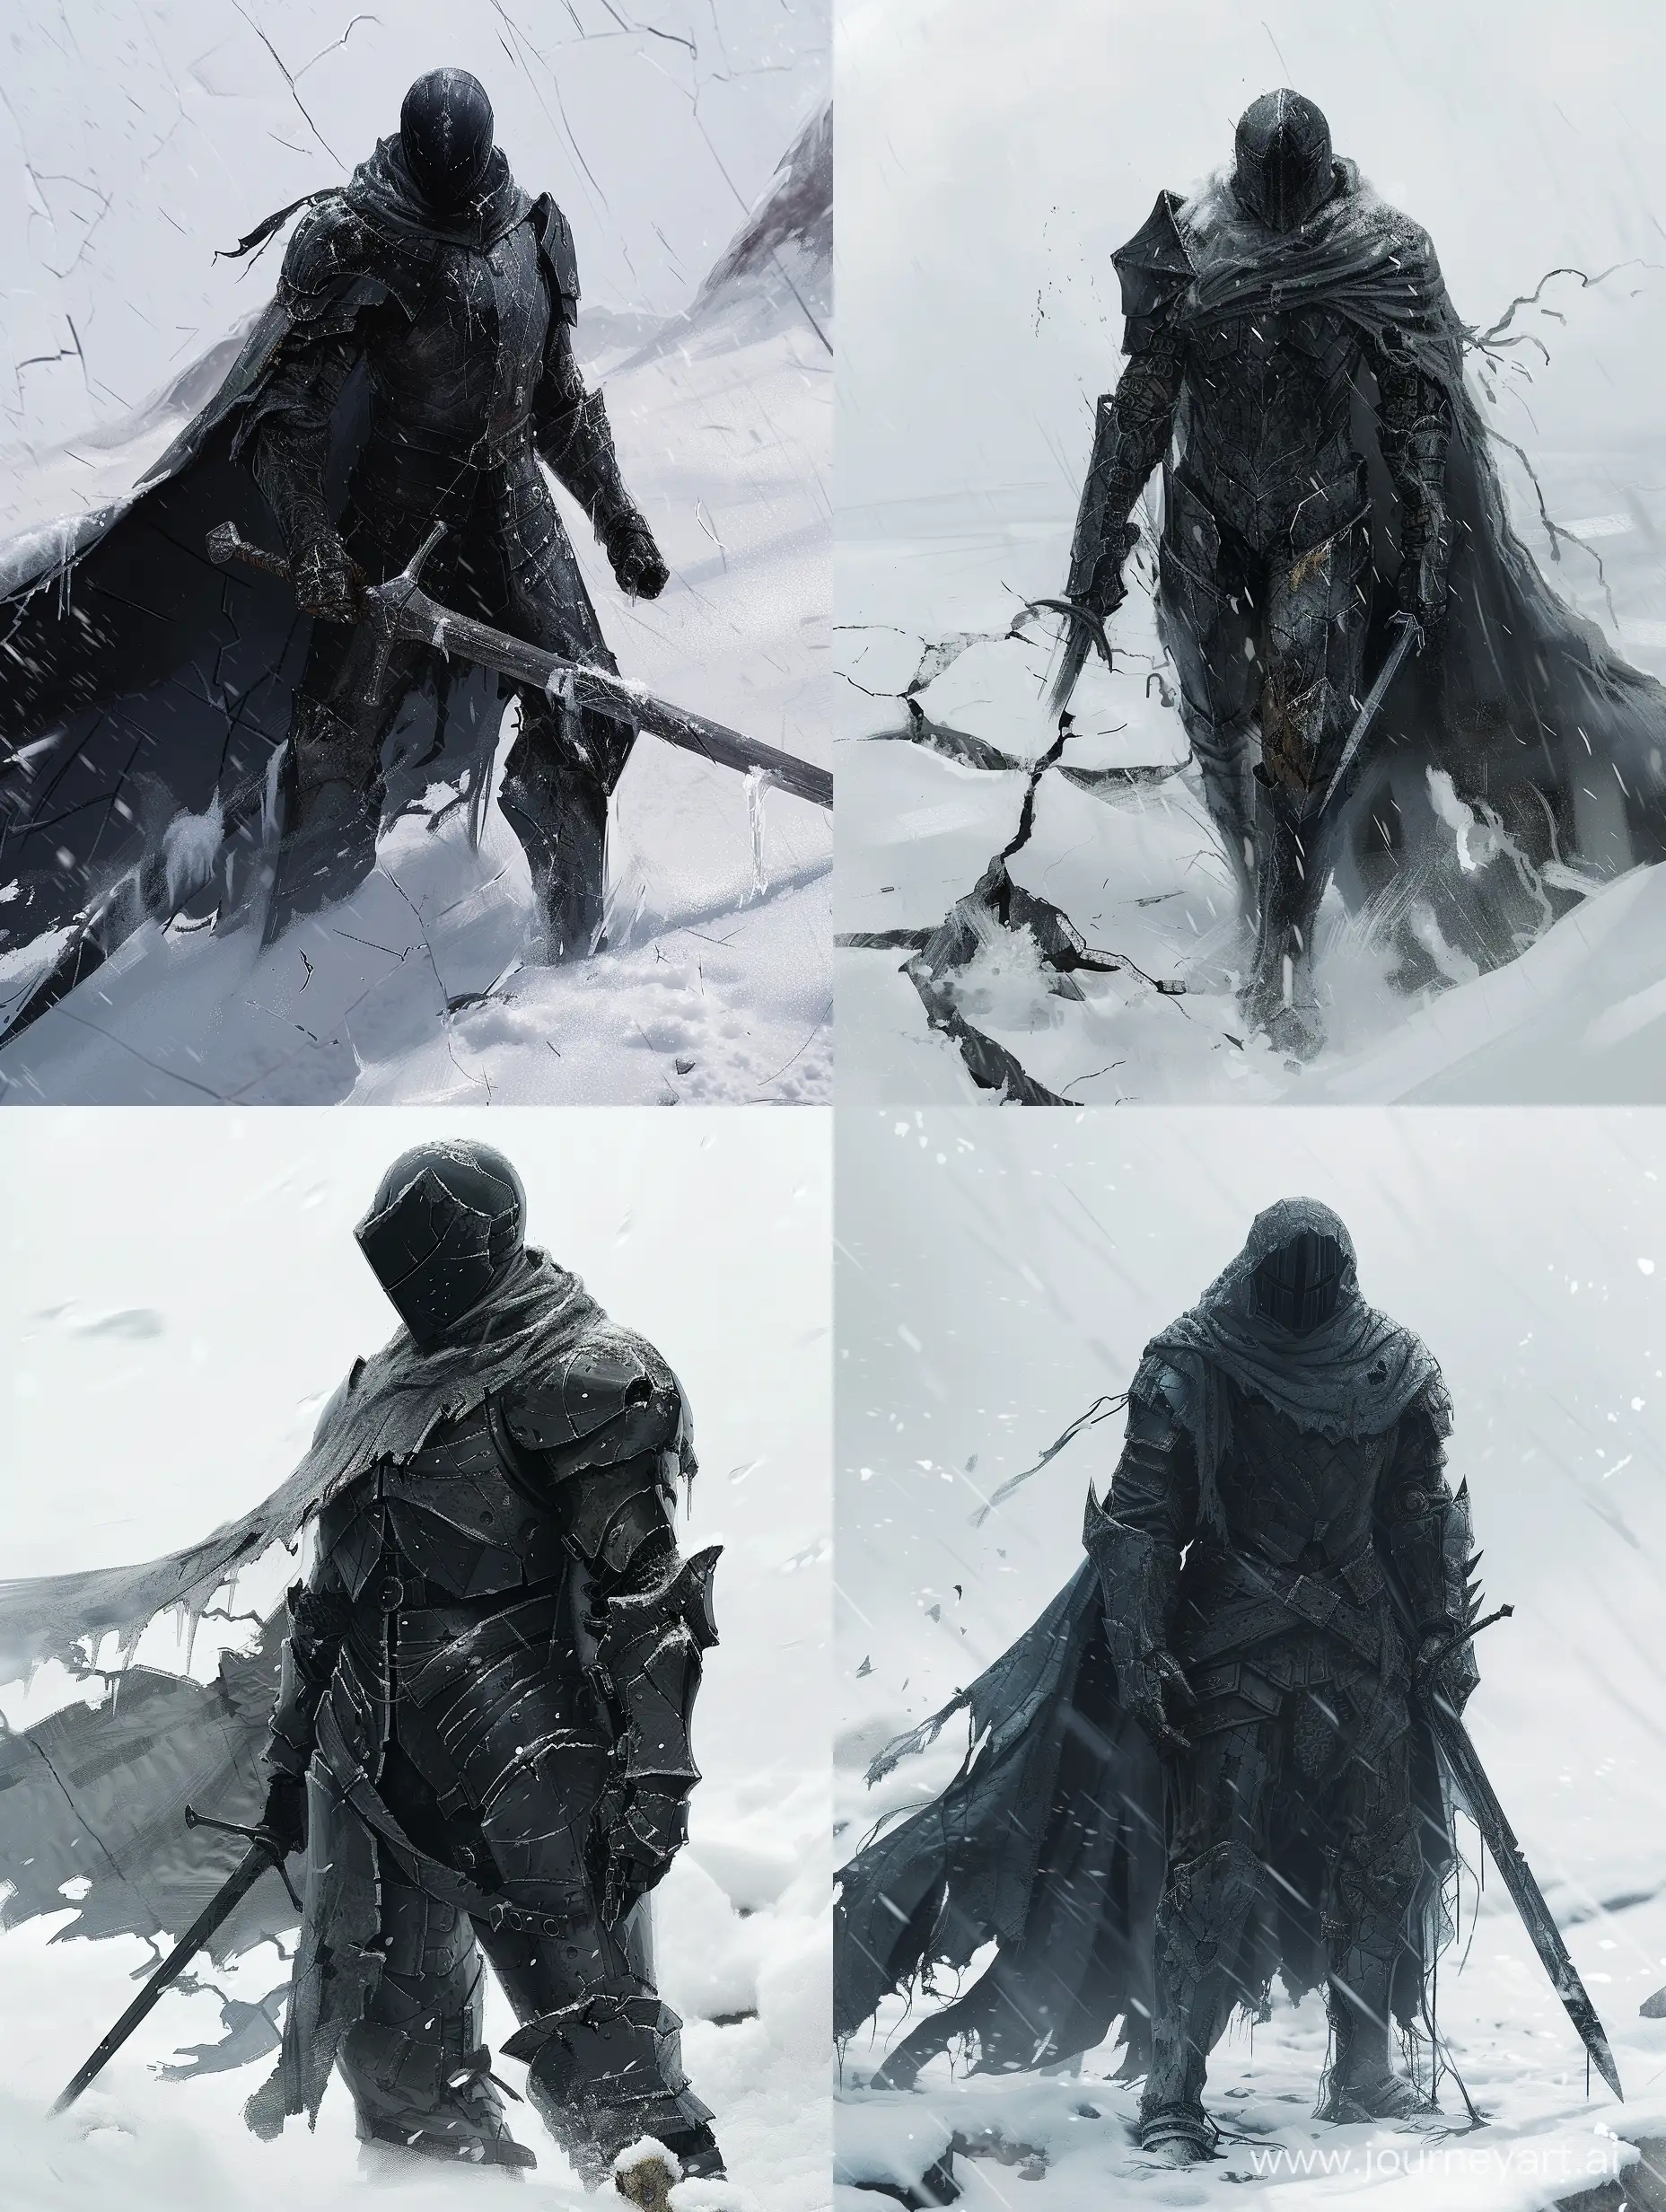 Snowy-Black-SciFi-Knight-Assassin-in-Brutal-Pose-Dark-Souls-Style-Concept-Art